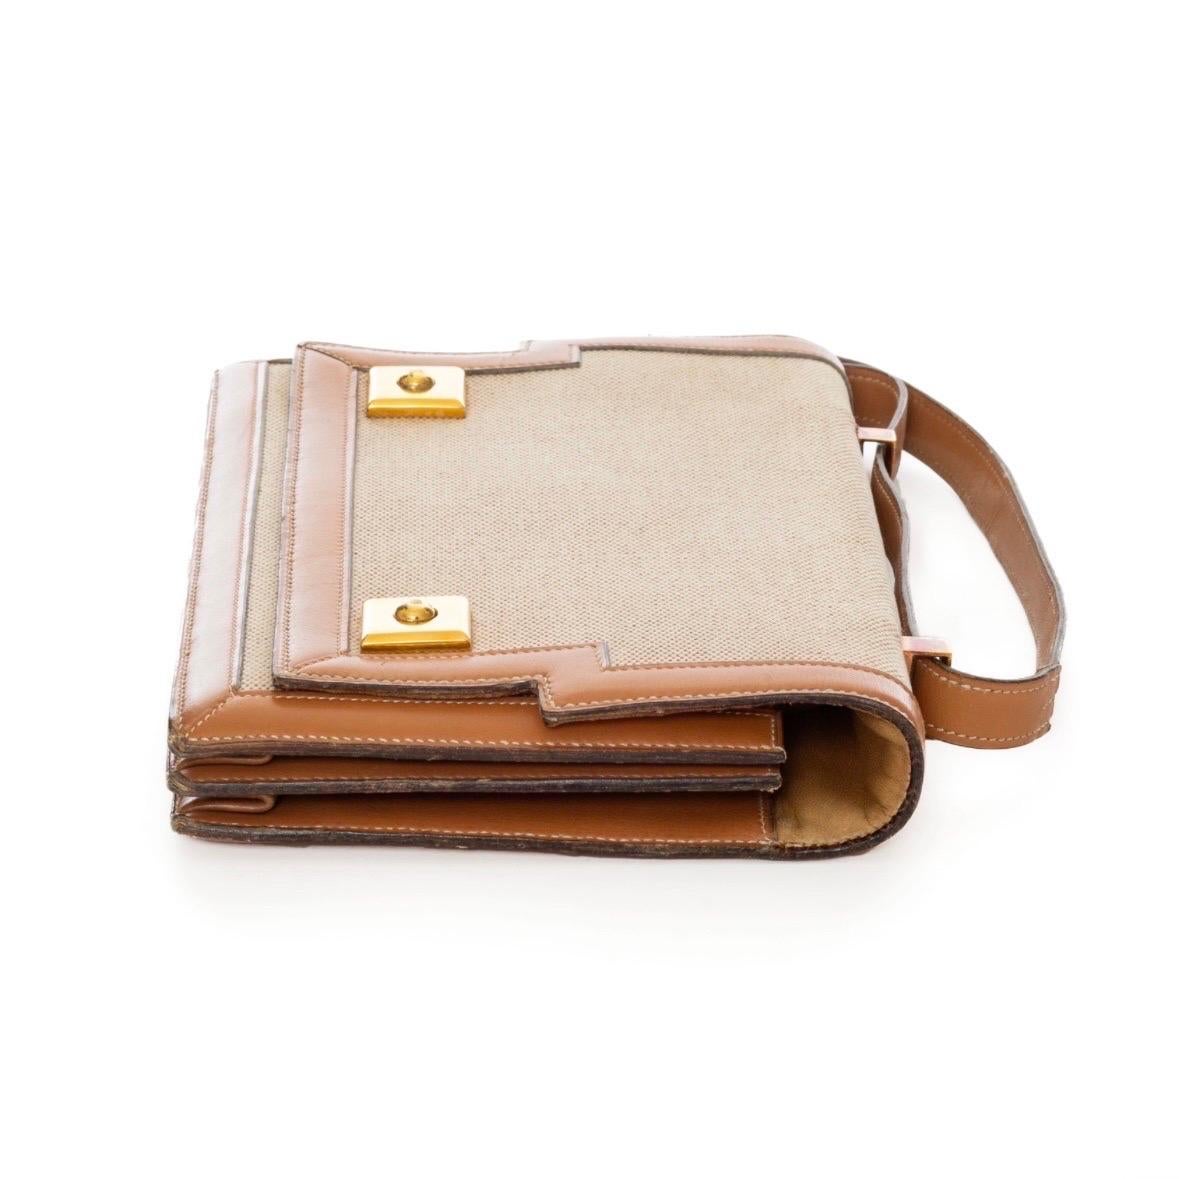 Hermès Vintage Tan Leather and Canvas Piano Shoulder Bag (Circa 1960s) For Sale 3